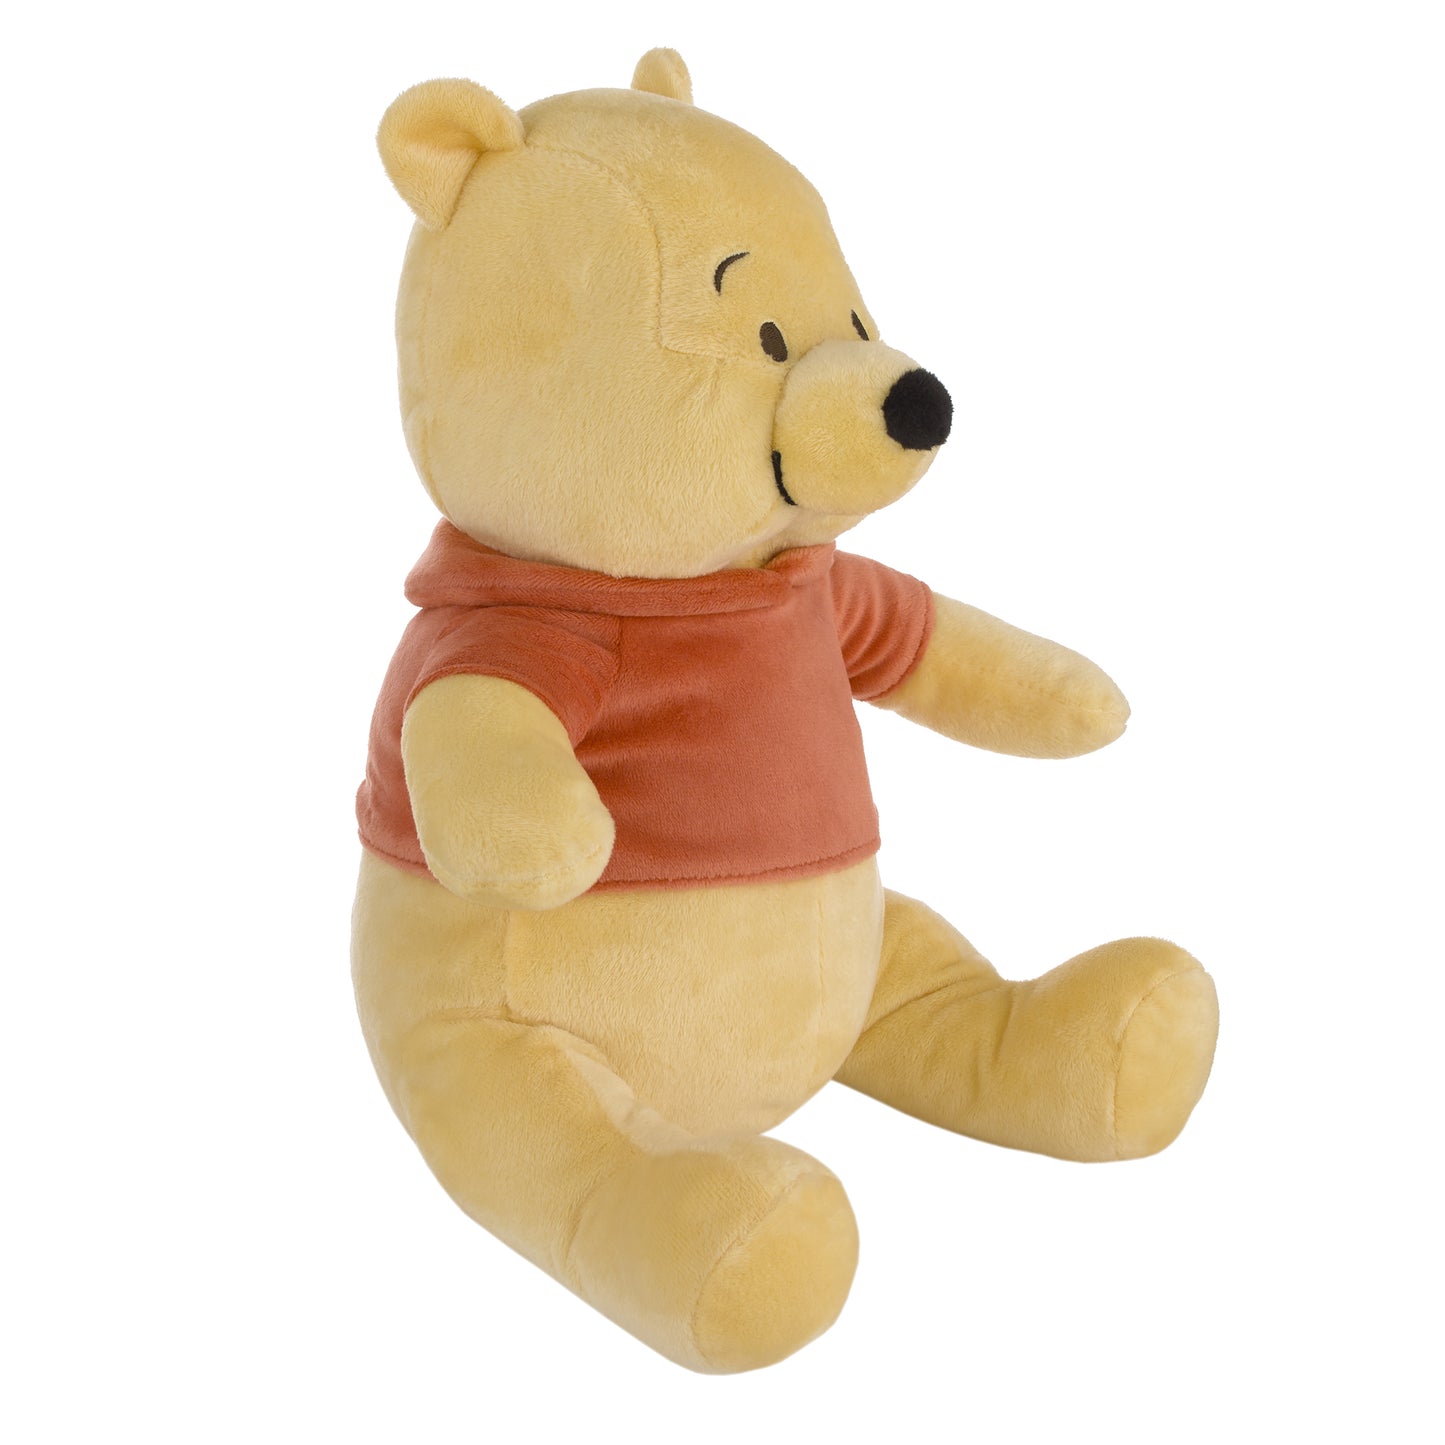 Disney Hugs and Honeycombs Winnie the Pooh Plush Stuffed Animal